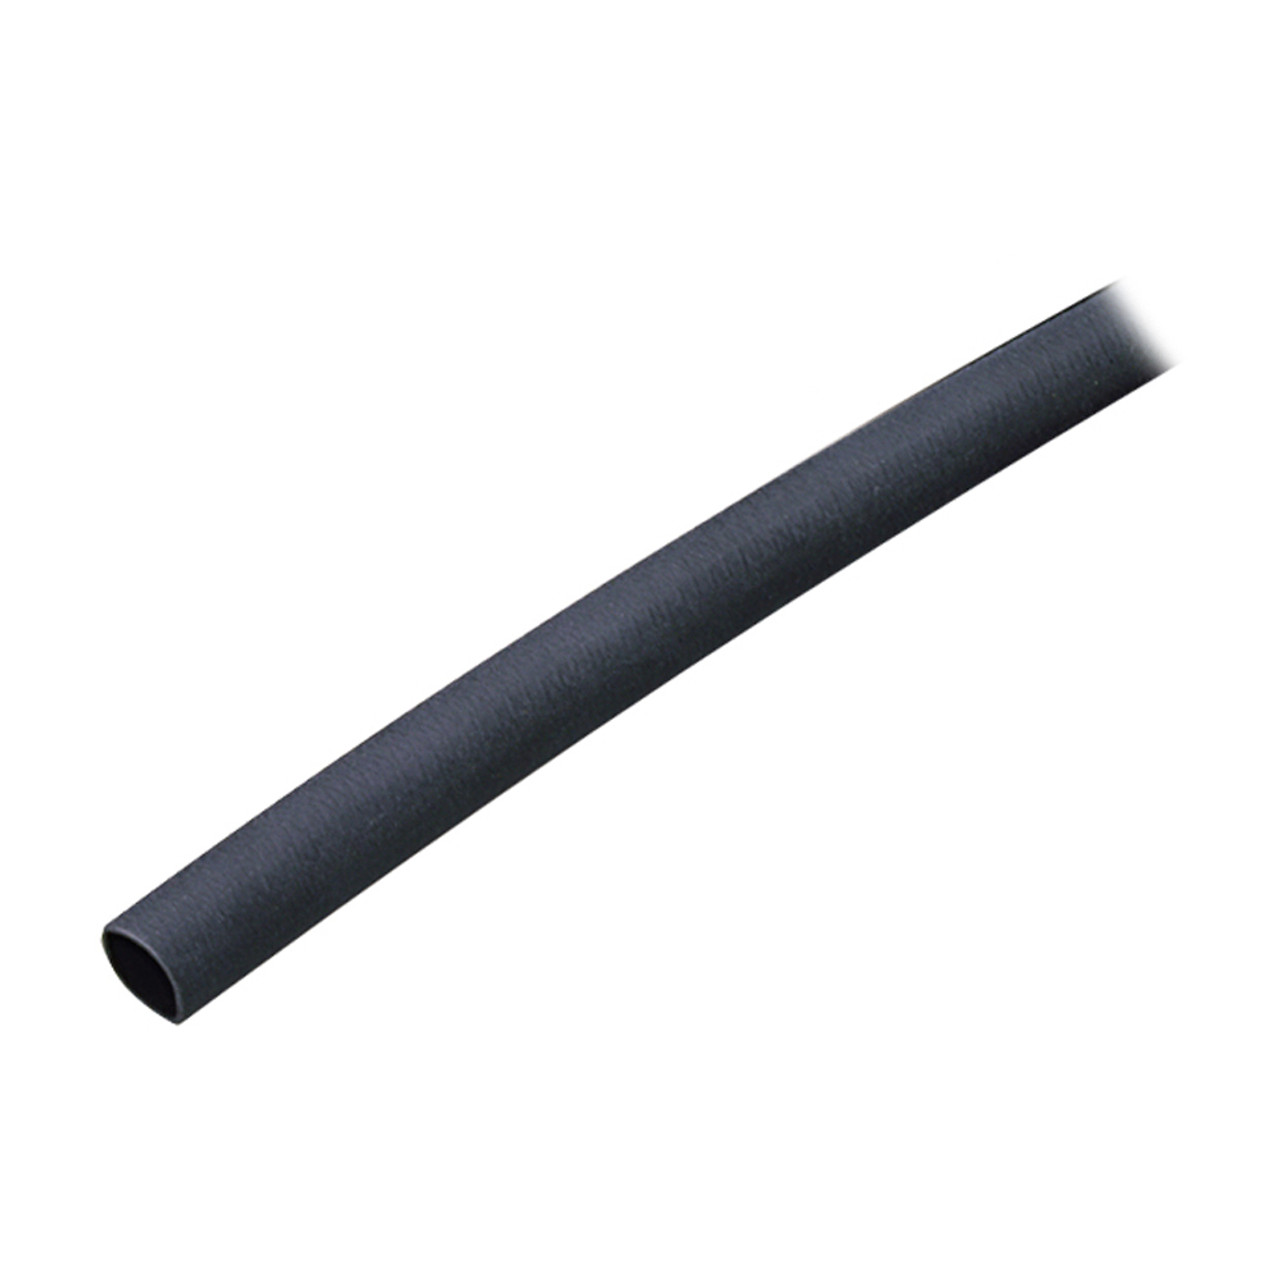 Ancor Adhesive Lined Heat Shrink Tubing (ALT) - 1\/4" x 48" - 1-Pack - Black [303148]